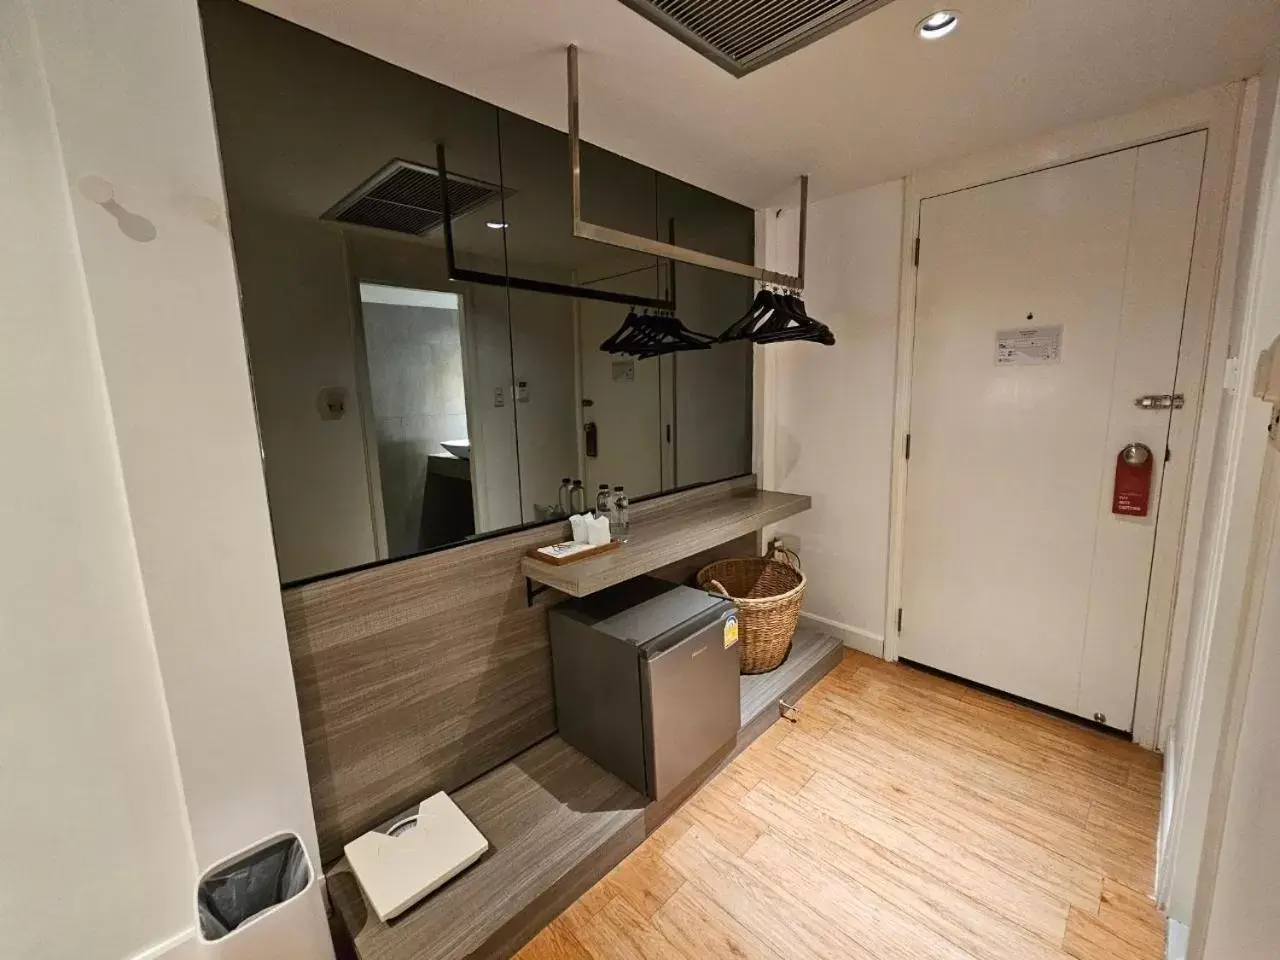 Area and facilities, Bathroom in Mittapan Hotel